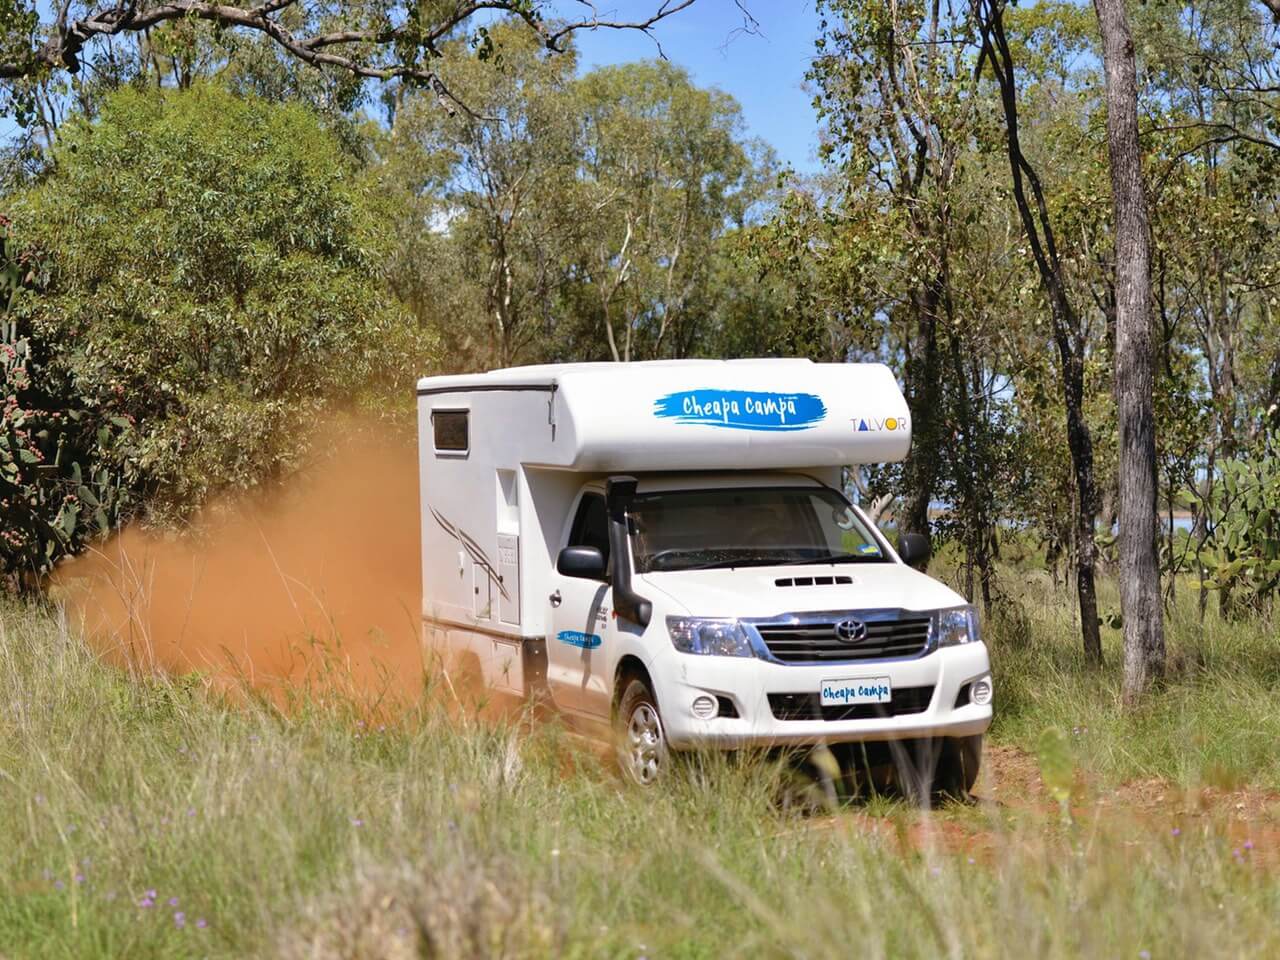 Cheapa Campa mit Four Wheel Drive in Australien